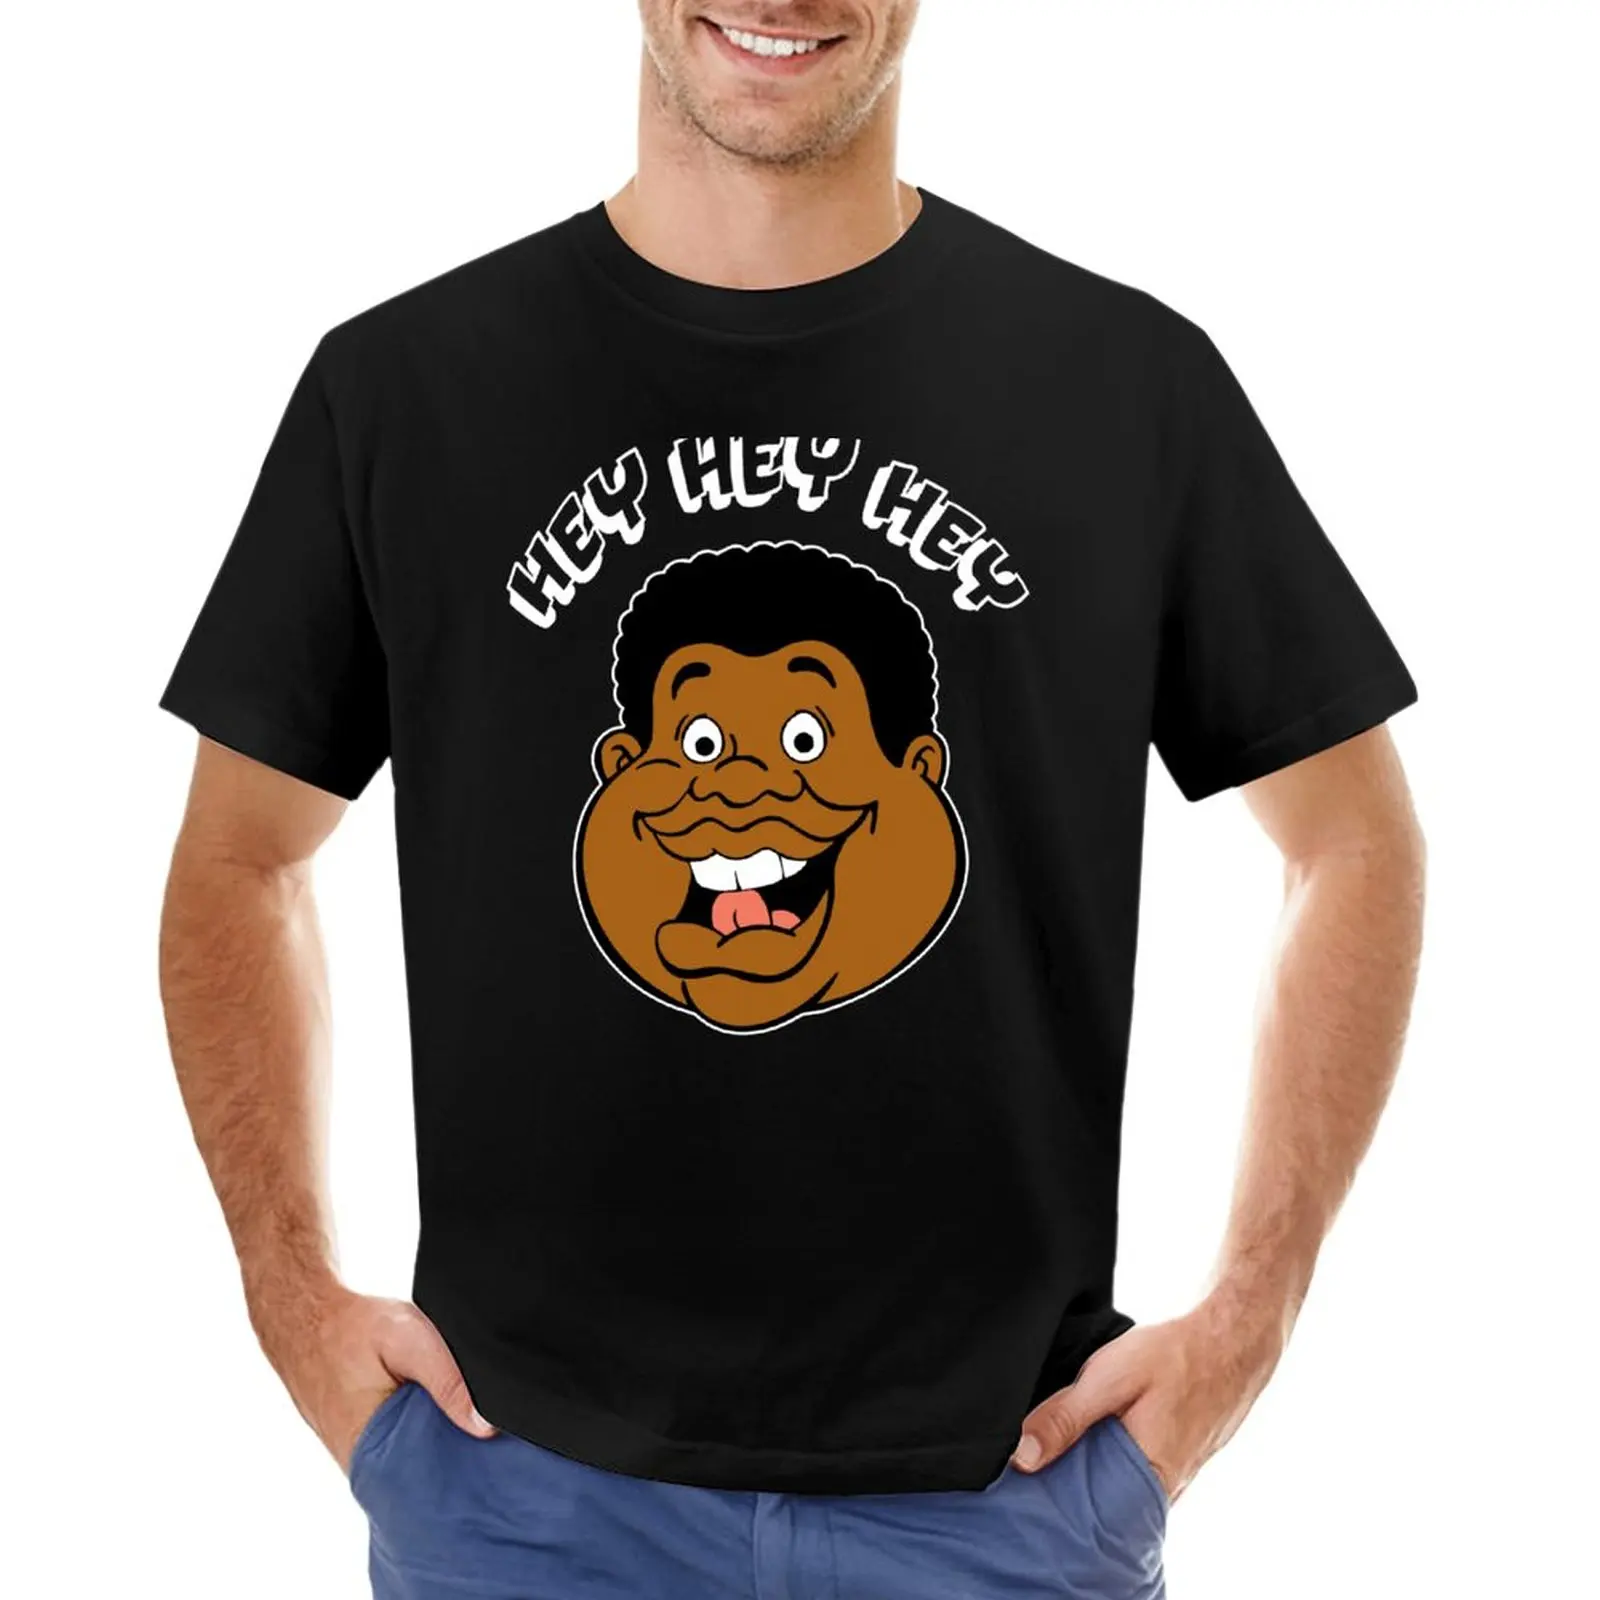 Copy of Fat Albert - Comic Cartoon T-Shirt Blouse Men's t-shirt